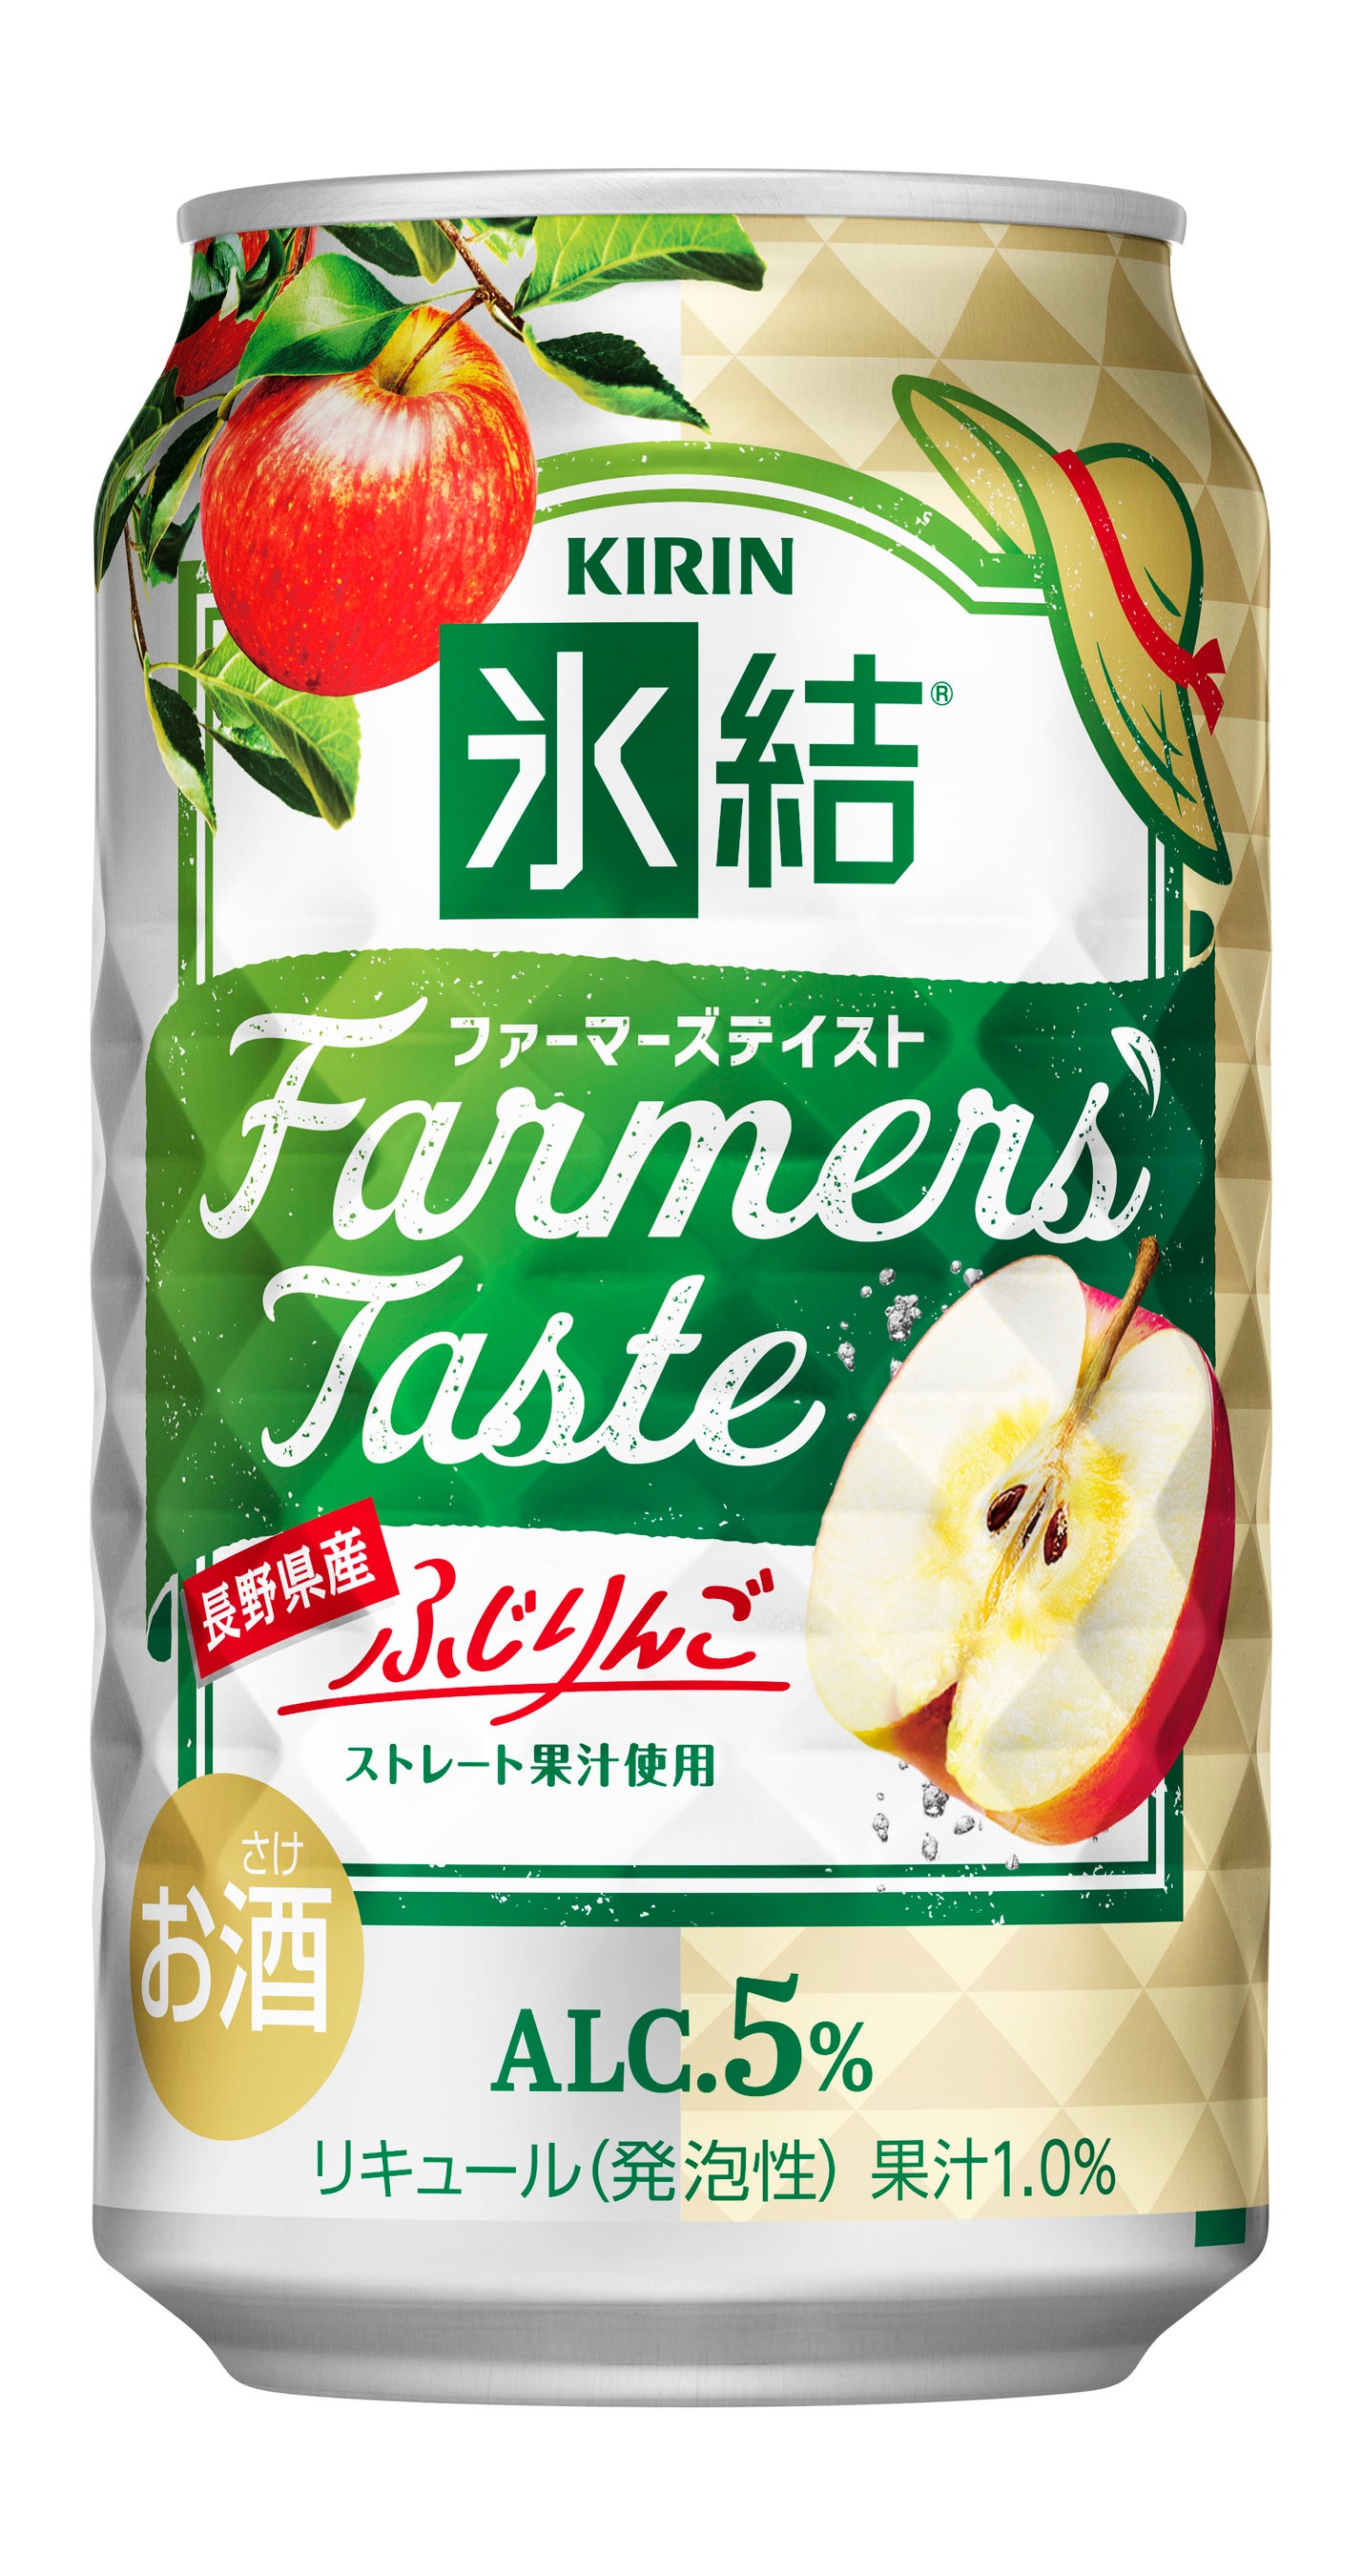 uL X(R)Farmersf Taste 쌧Yӂ񂲁iԌ/ZuACjv72i΁jVI